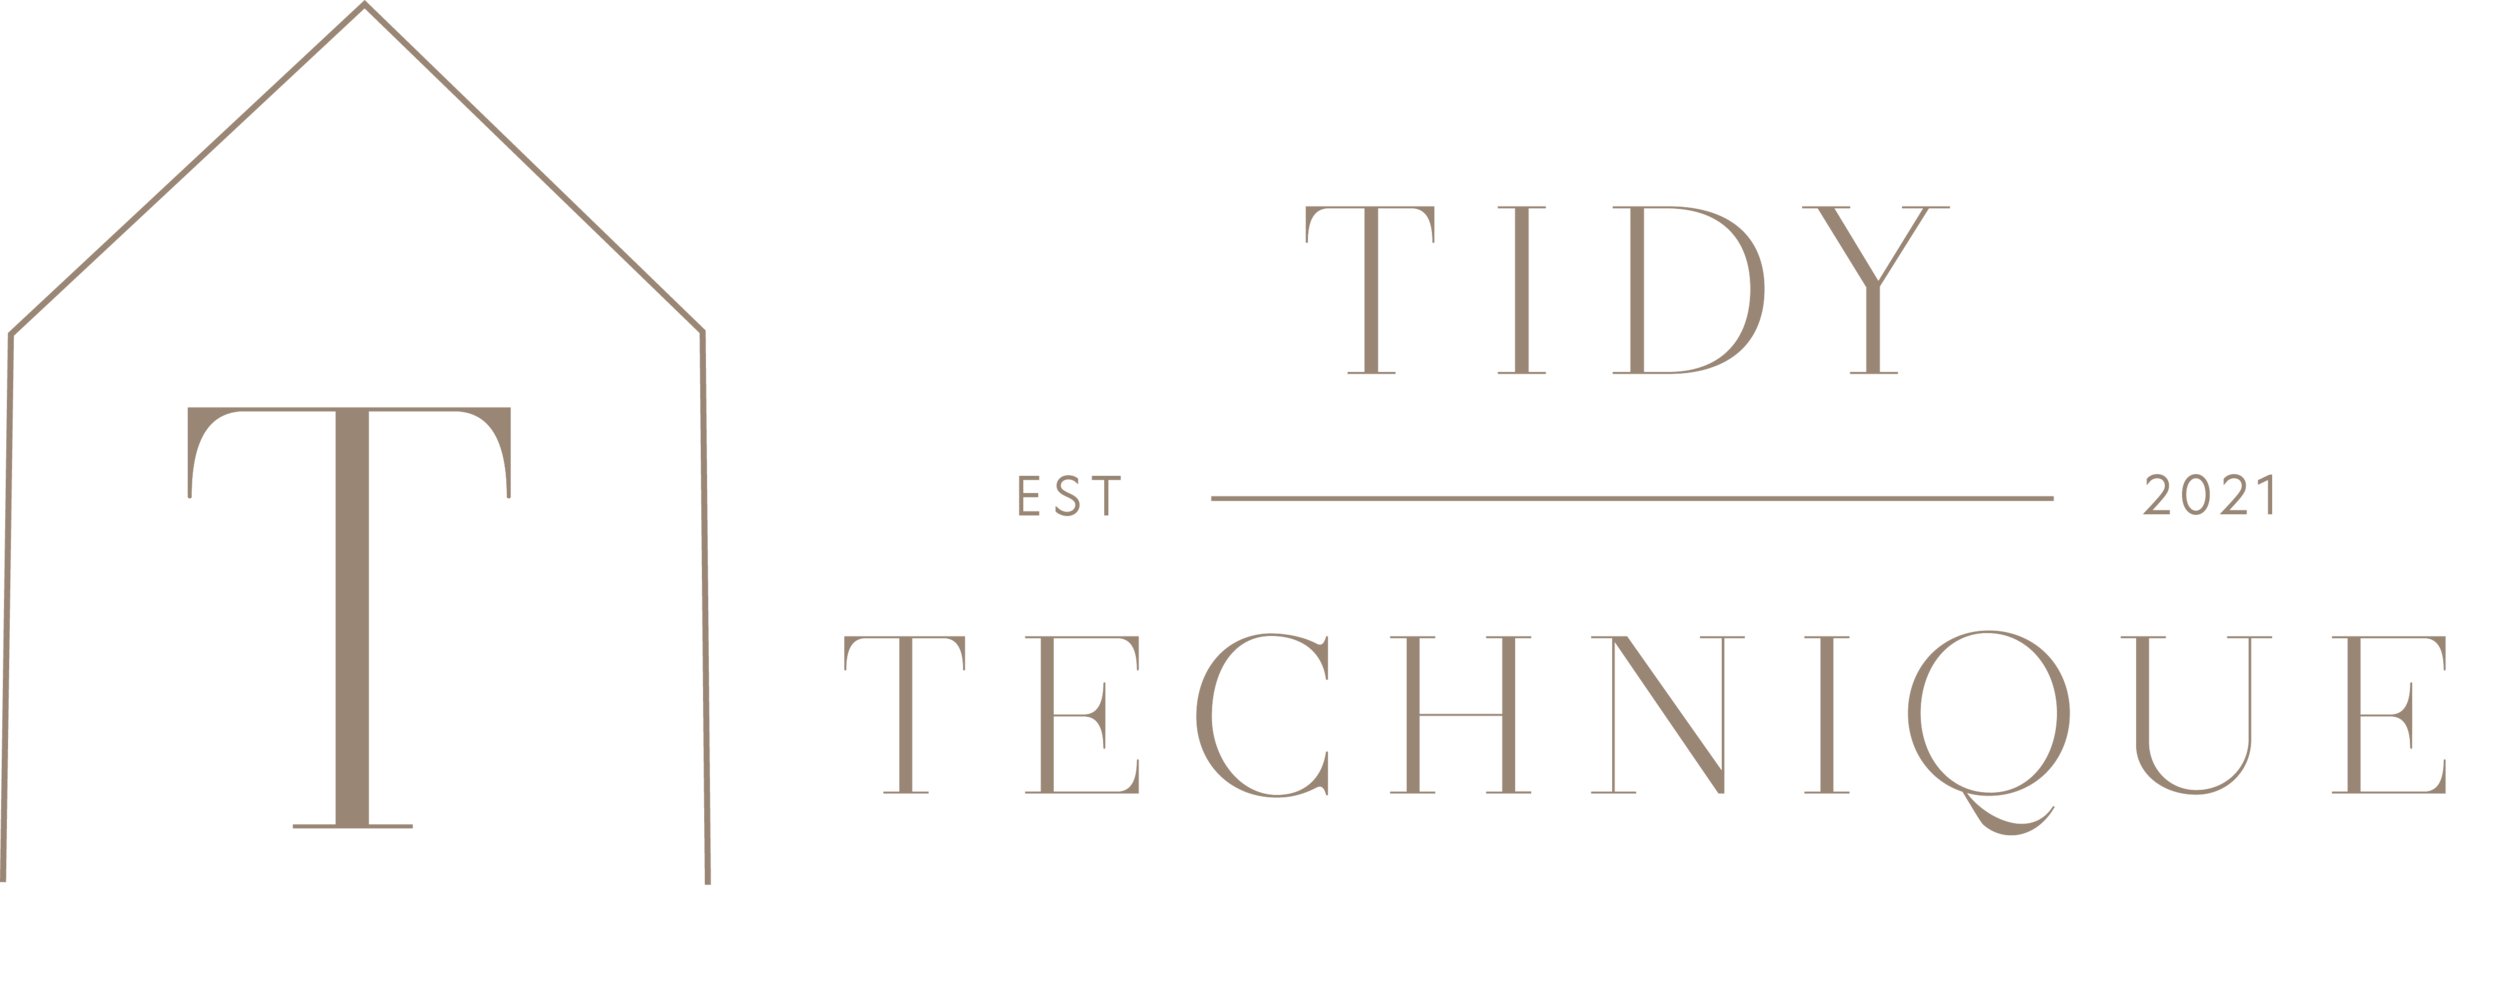 The Tidy Technique